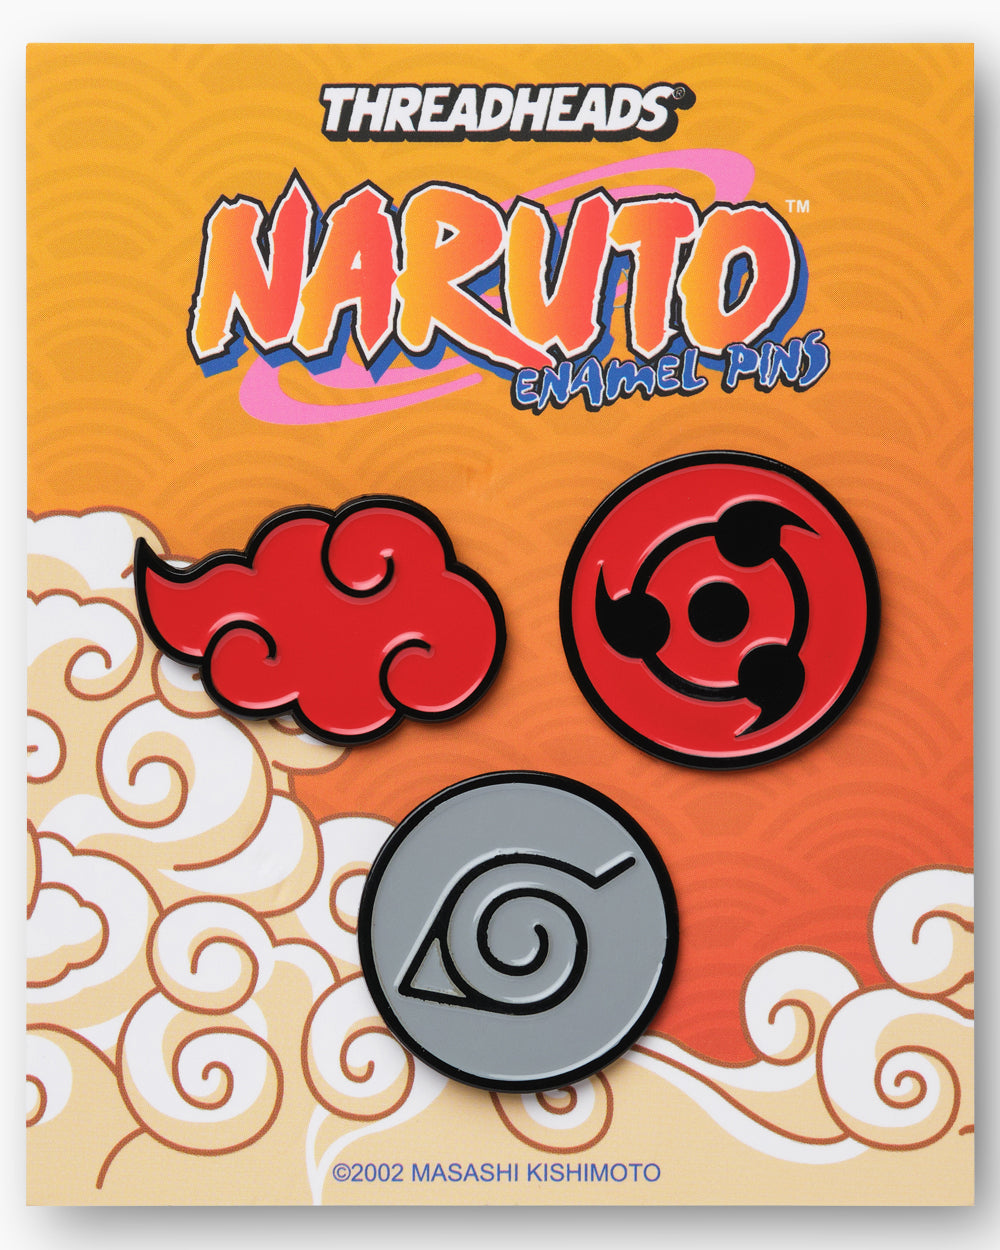 Naruto Emblems Enamel Pin | Threadheads Exclusive